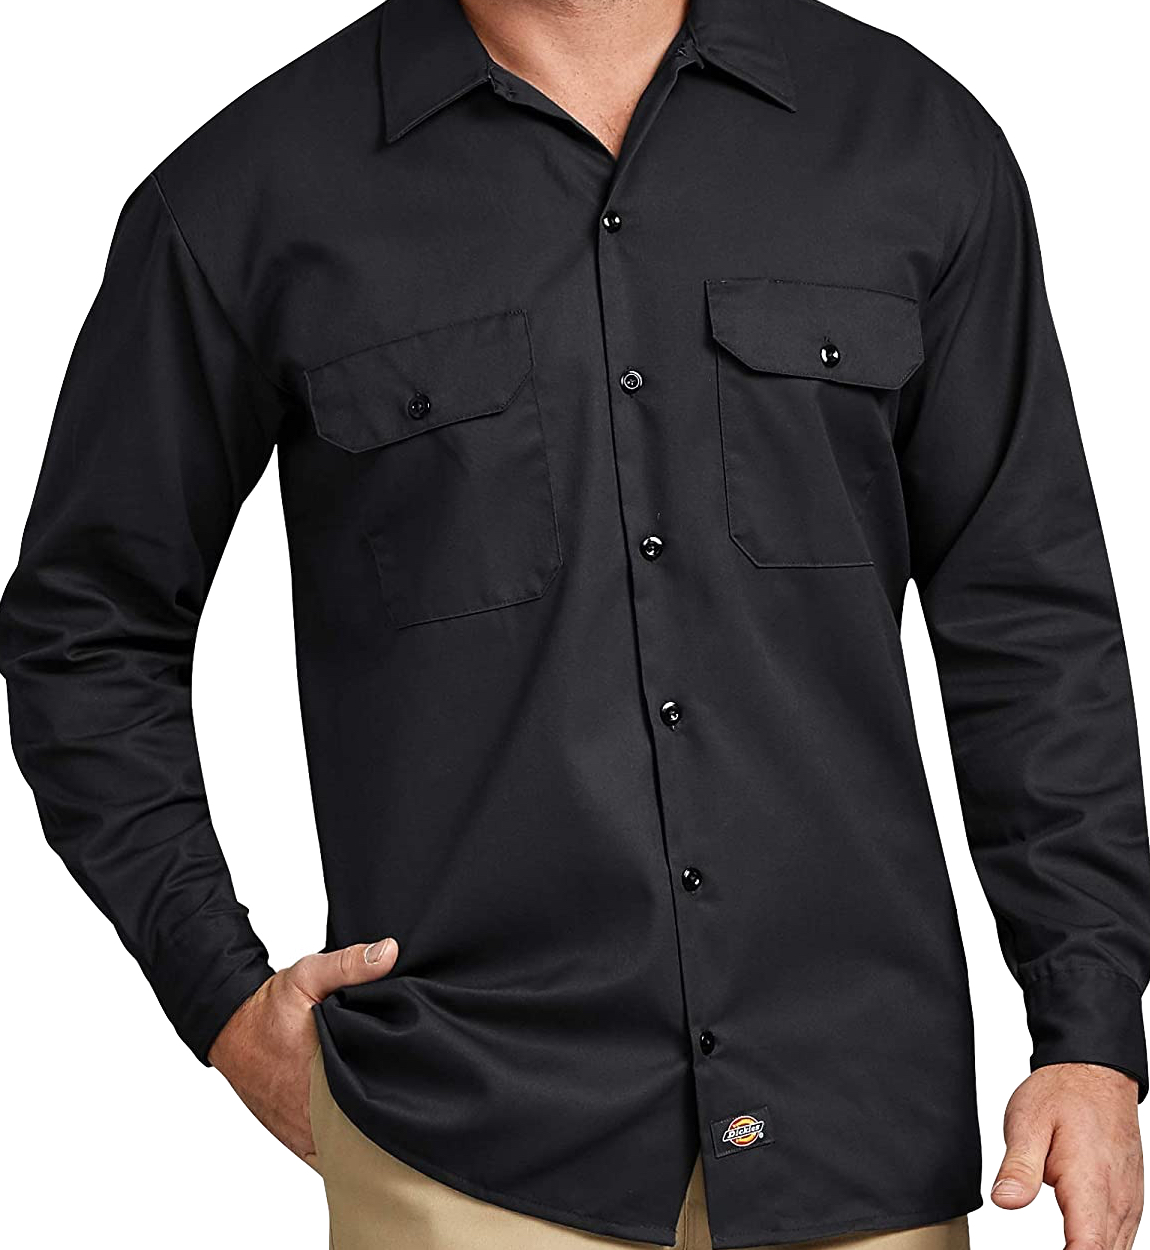 Dickies Men's Long Sleeve Work Shirt (Black): S, M, L $11 + FS w/ Prime